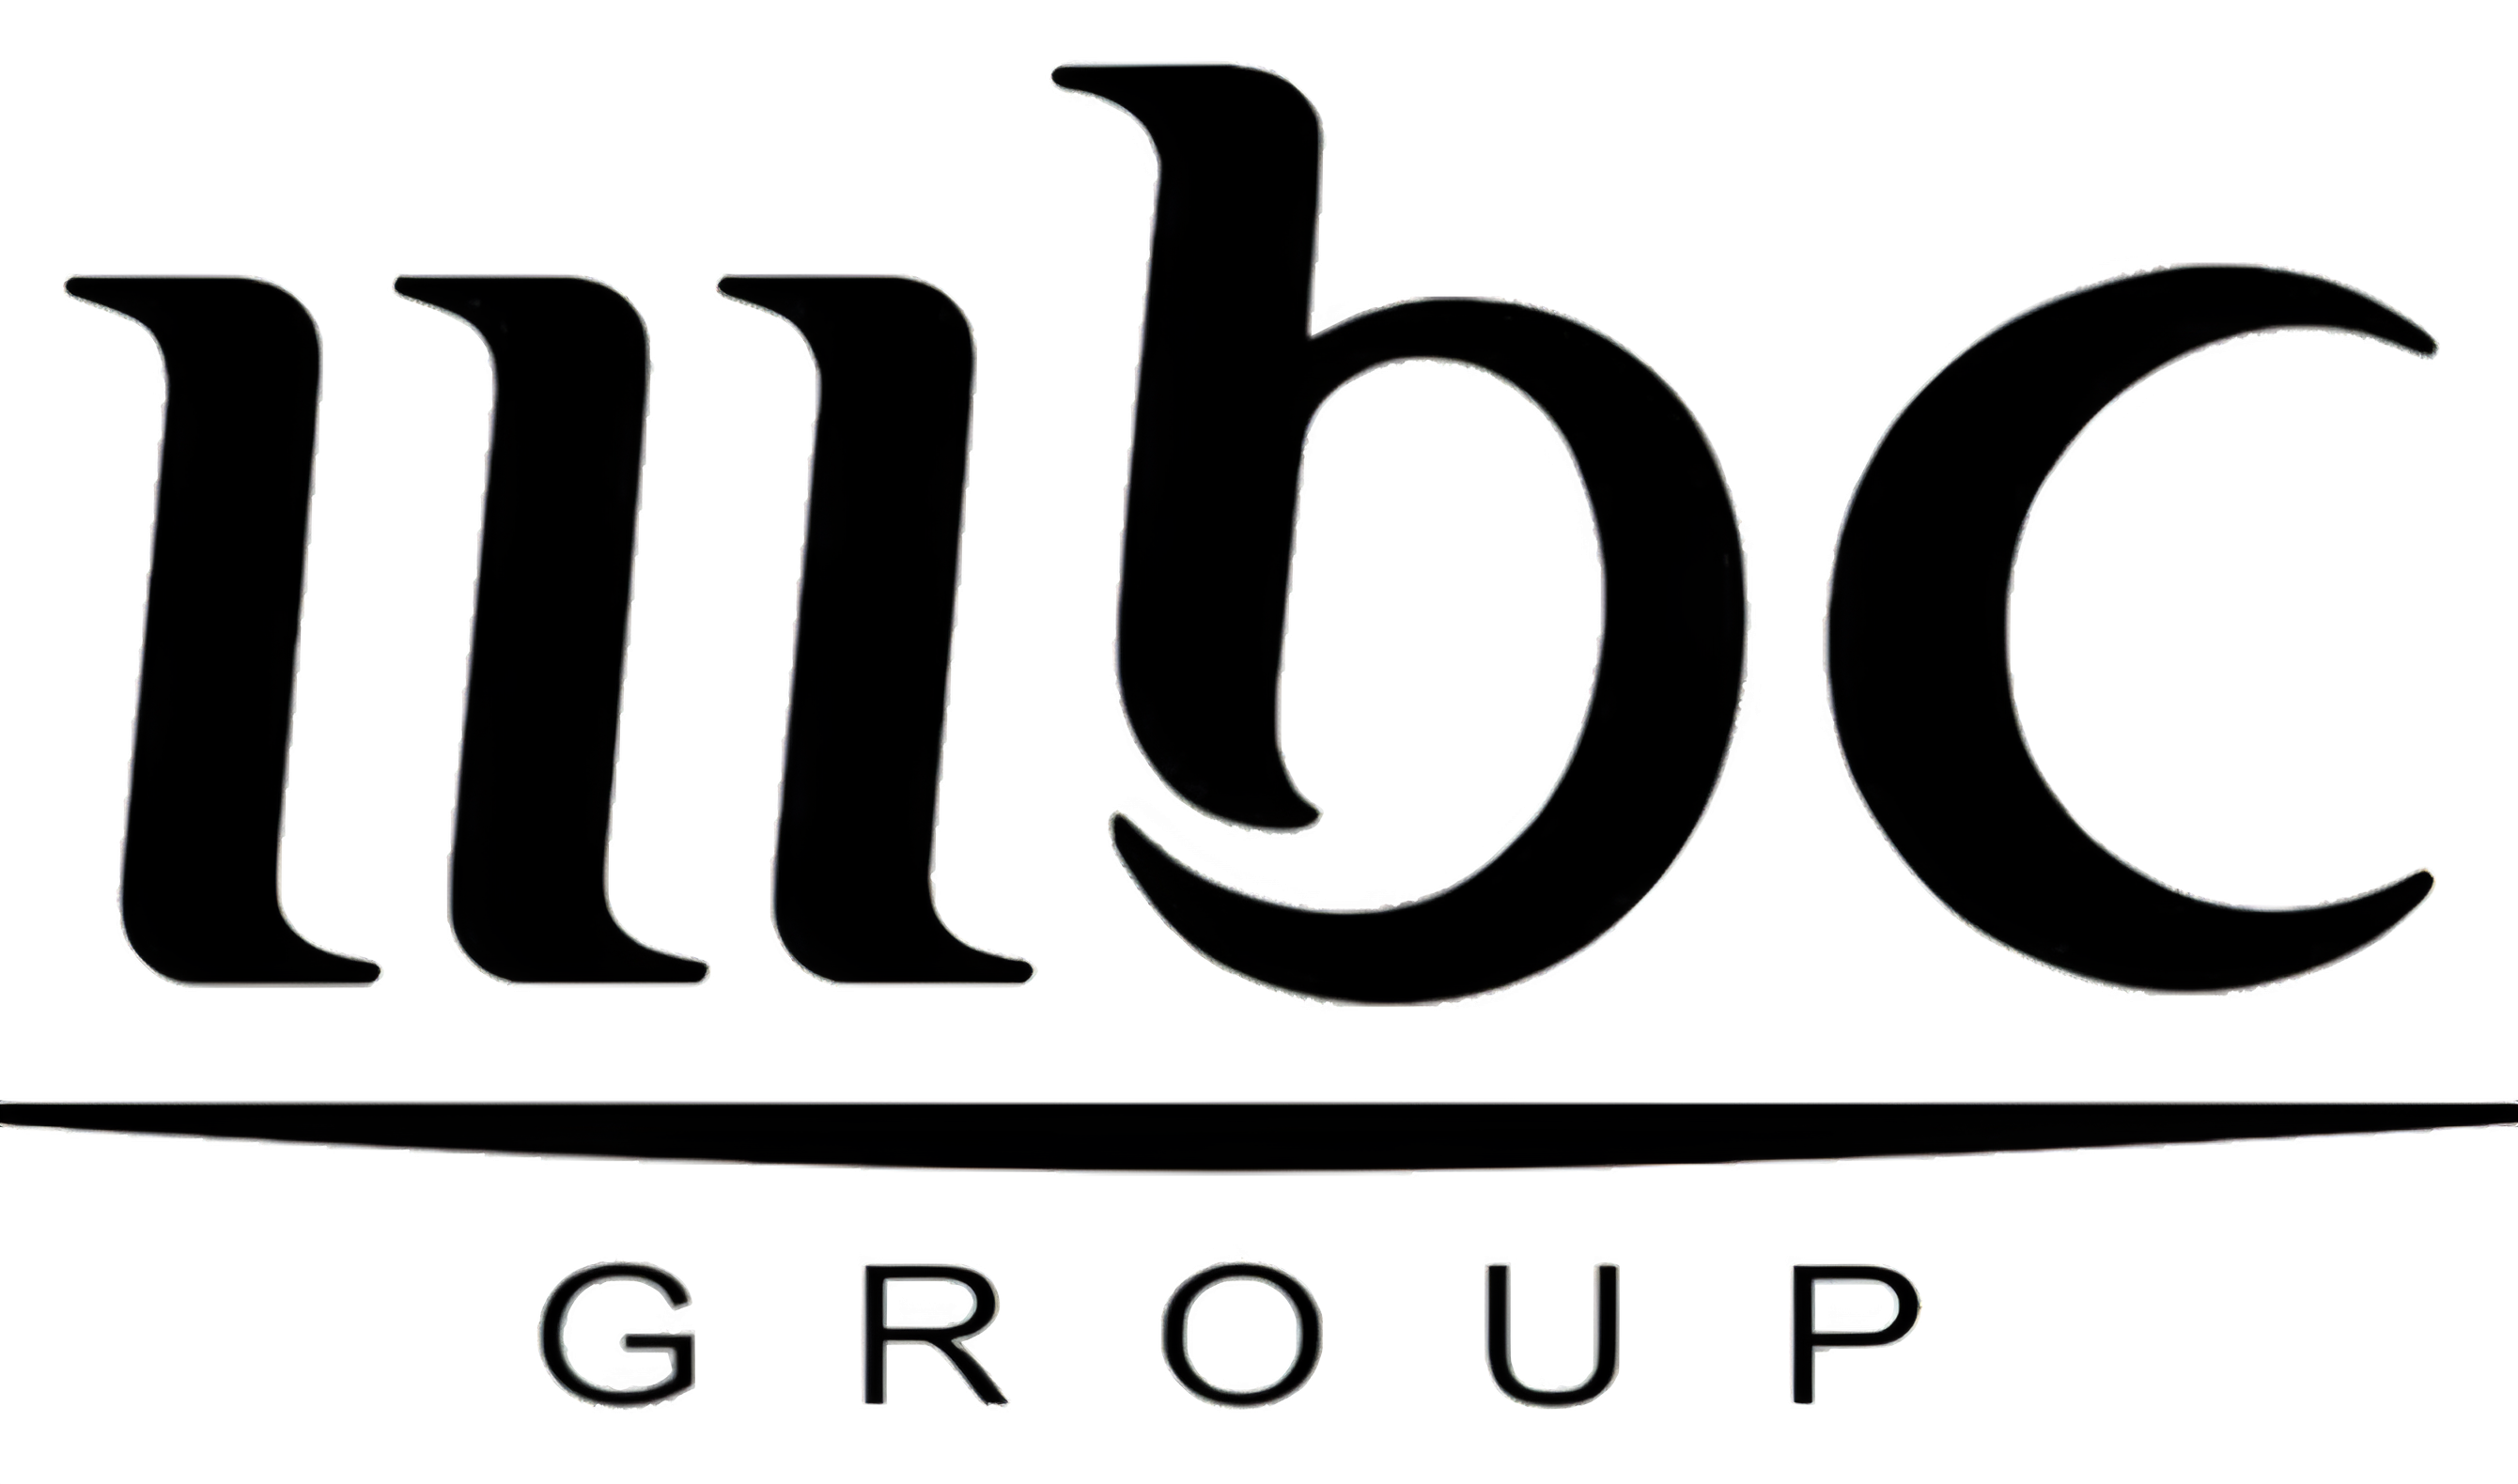 MBC_Group.png